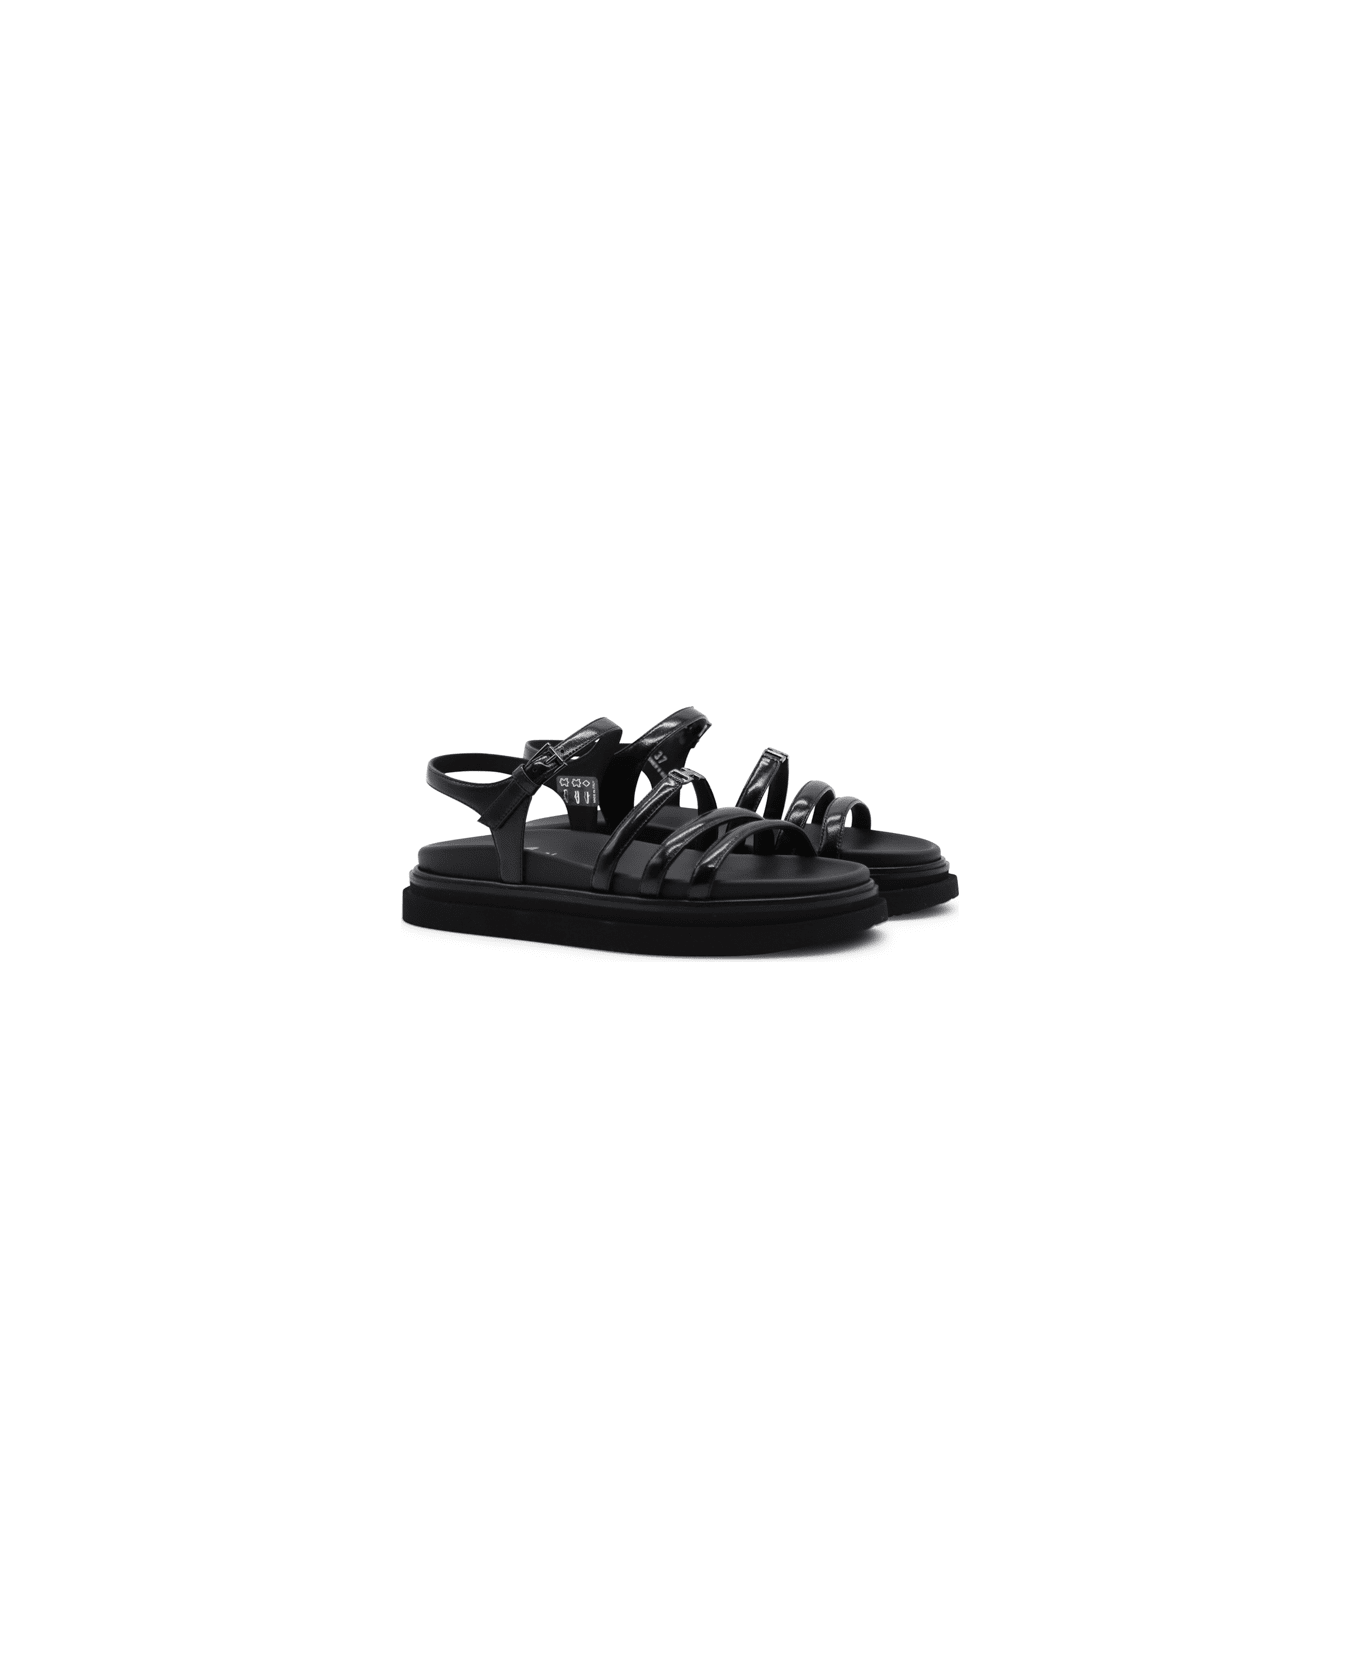 Hogan Patent Leather Sandals - Black